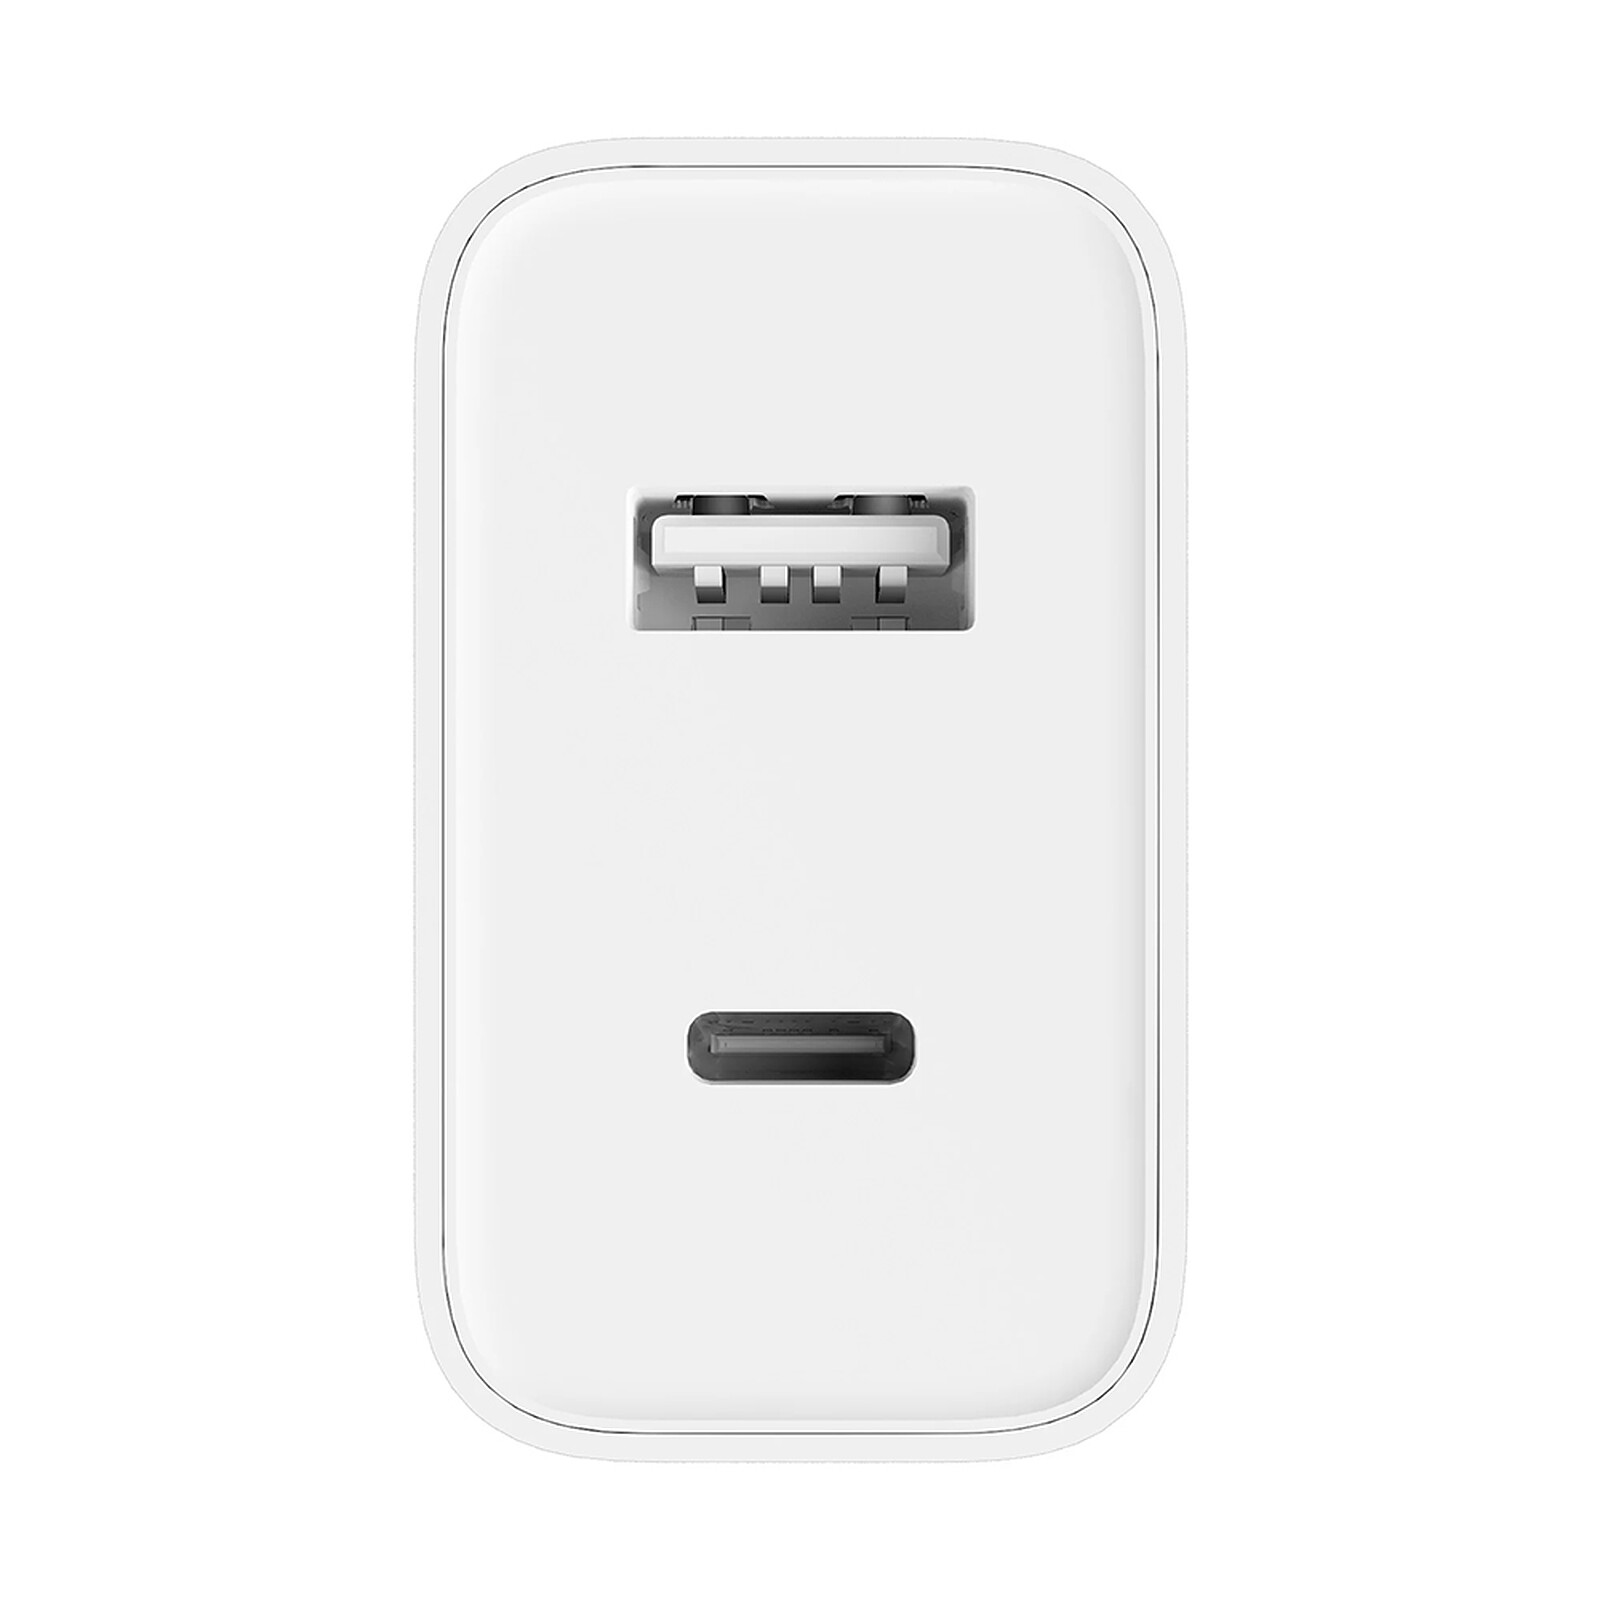 Xiaomi Fast Chargeur 65W Blanc - USB - Garantie 3 ans LDLC